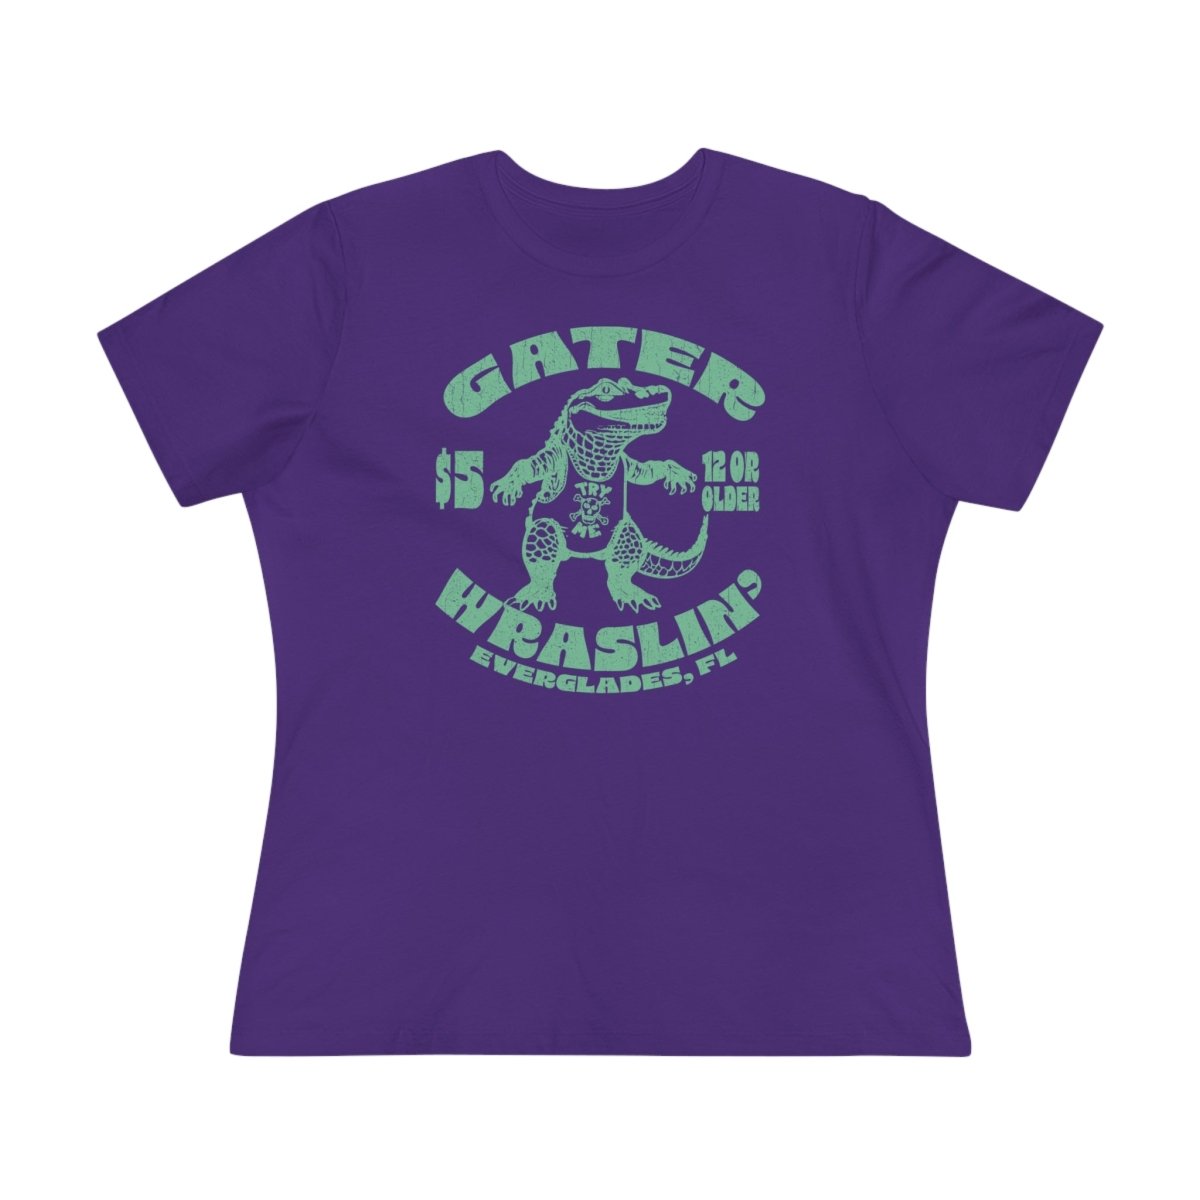 Alligator Wrestling Women's Premium Relaxed Fit T-Shirt, Florida, Swamp, Funny, Inspire Challenge